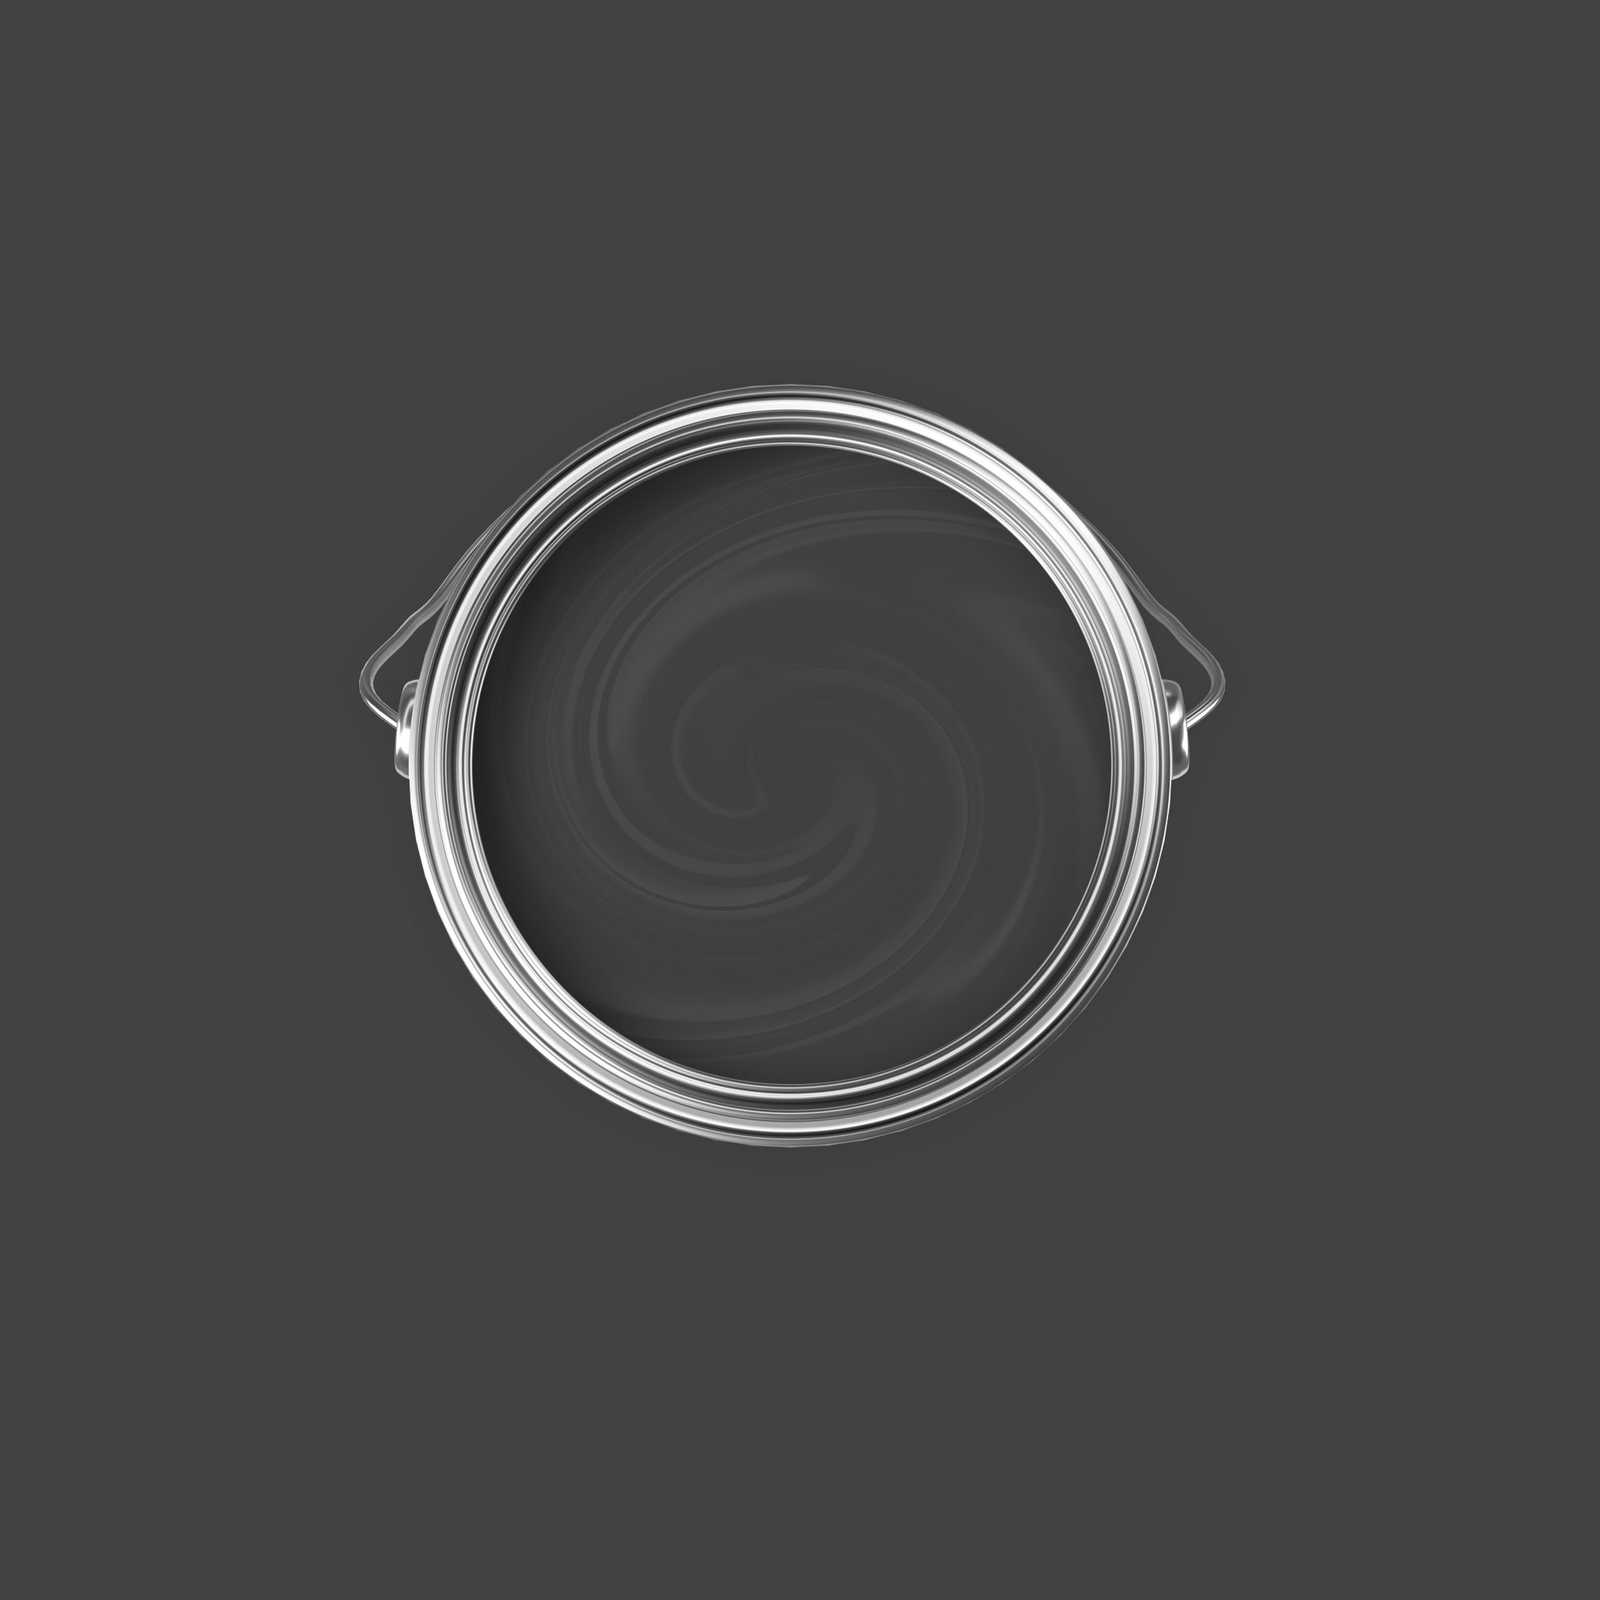             Premium Muurverf sterk zwart »Charcoal« NW106 – 2,5 Liter
        